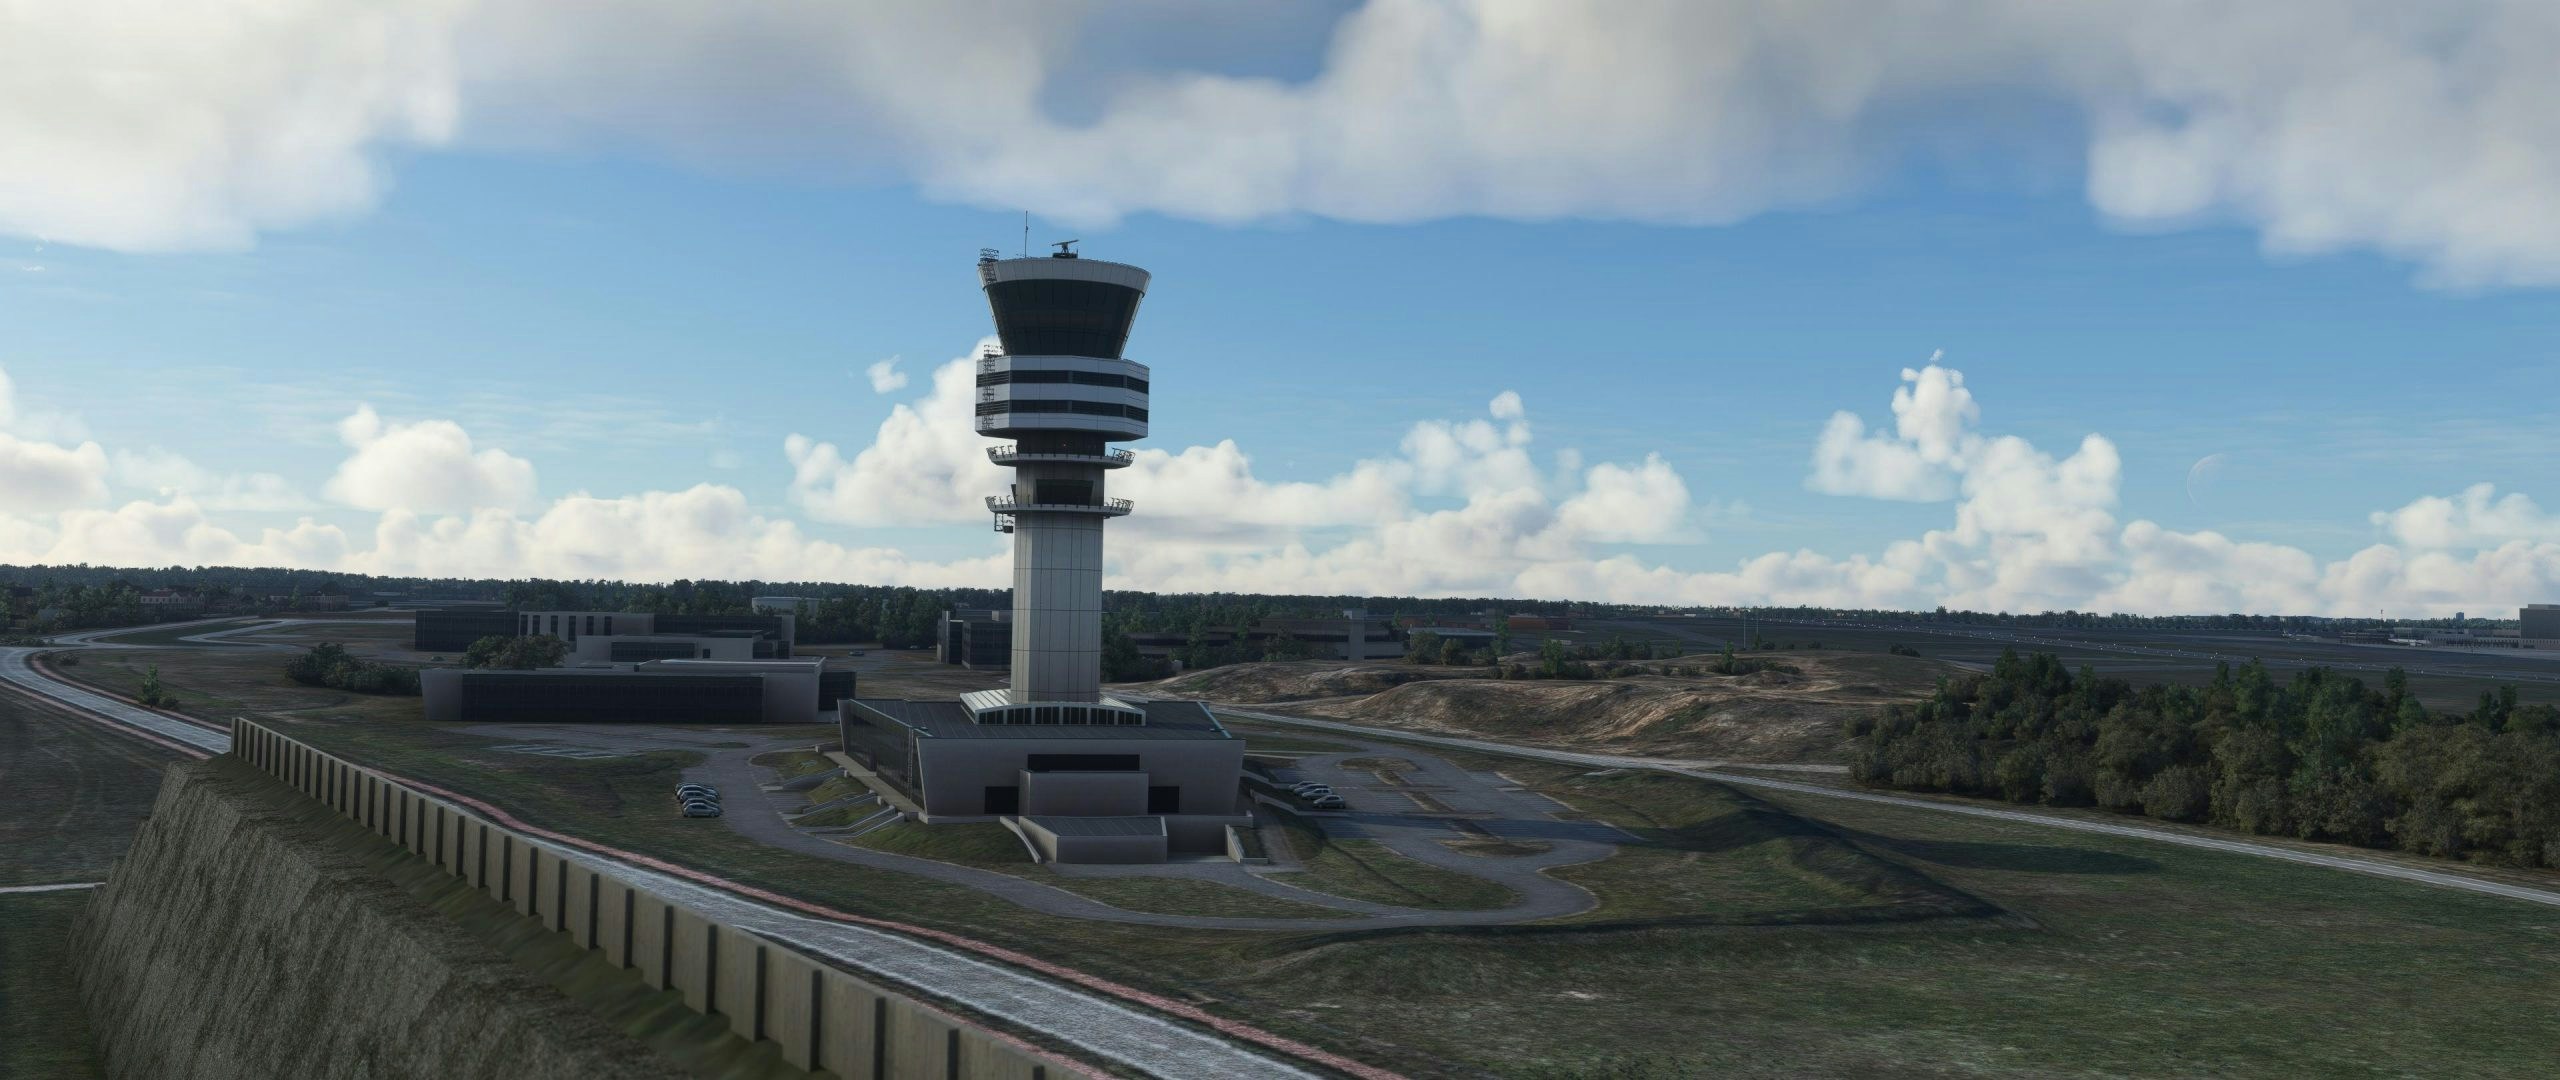 New Aerosoft Airport: Brussels International Previews